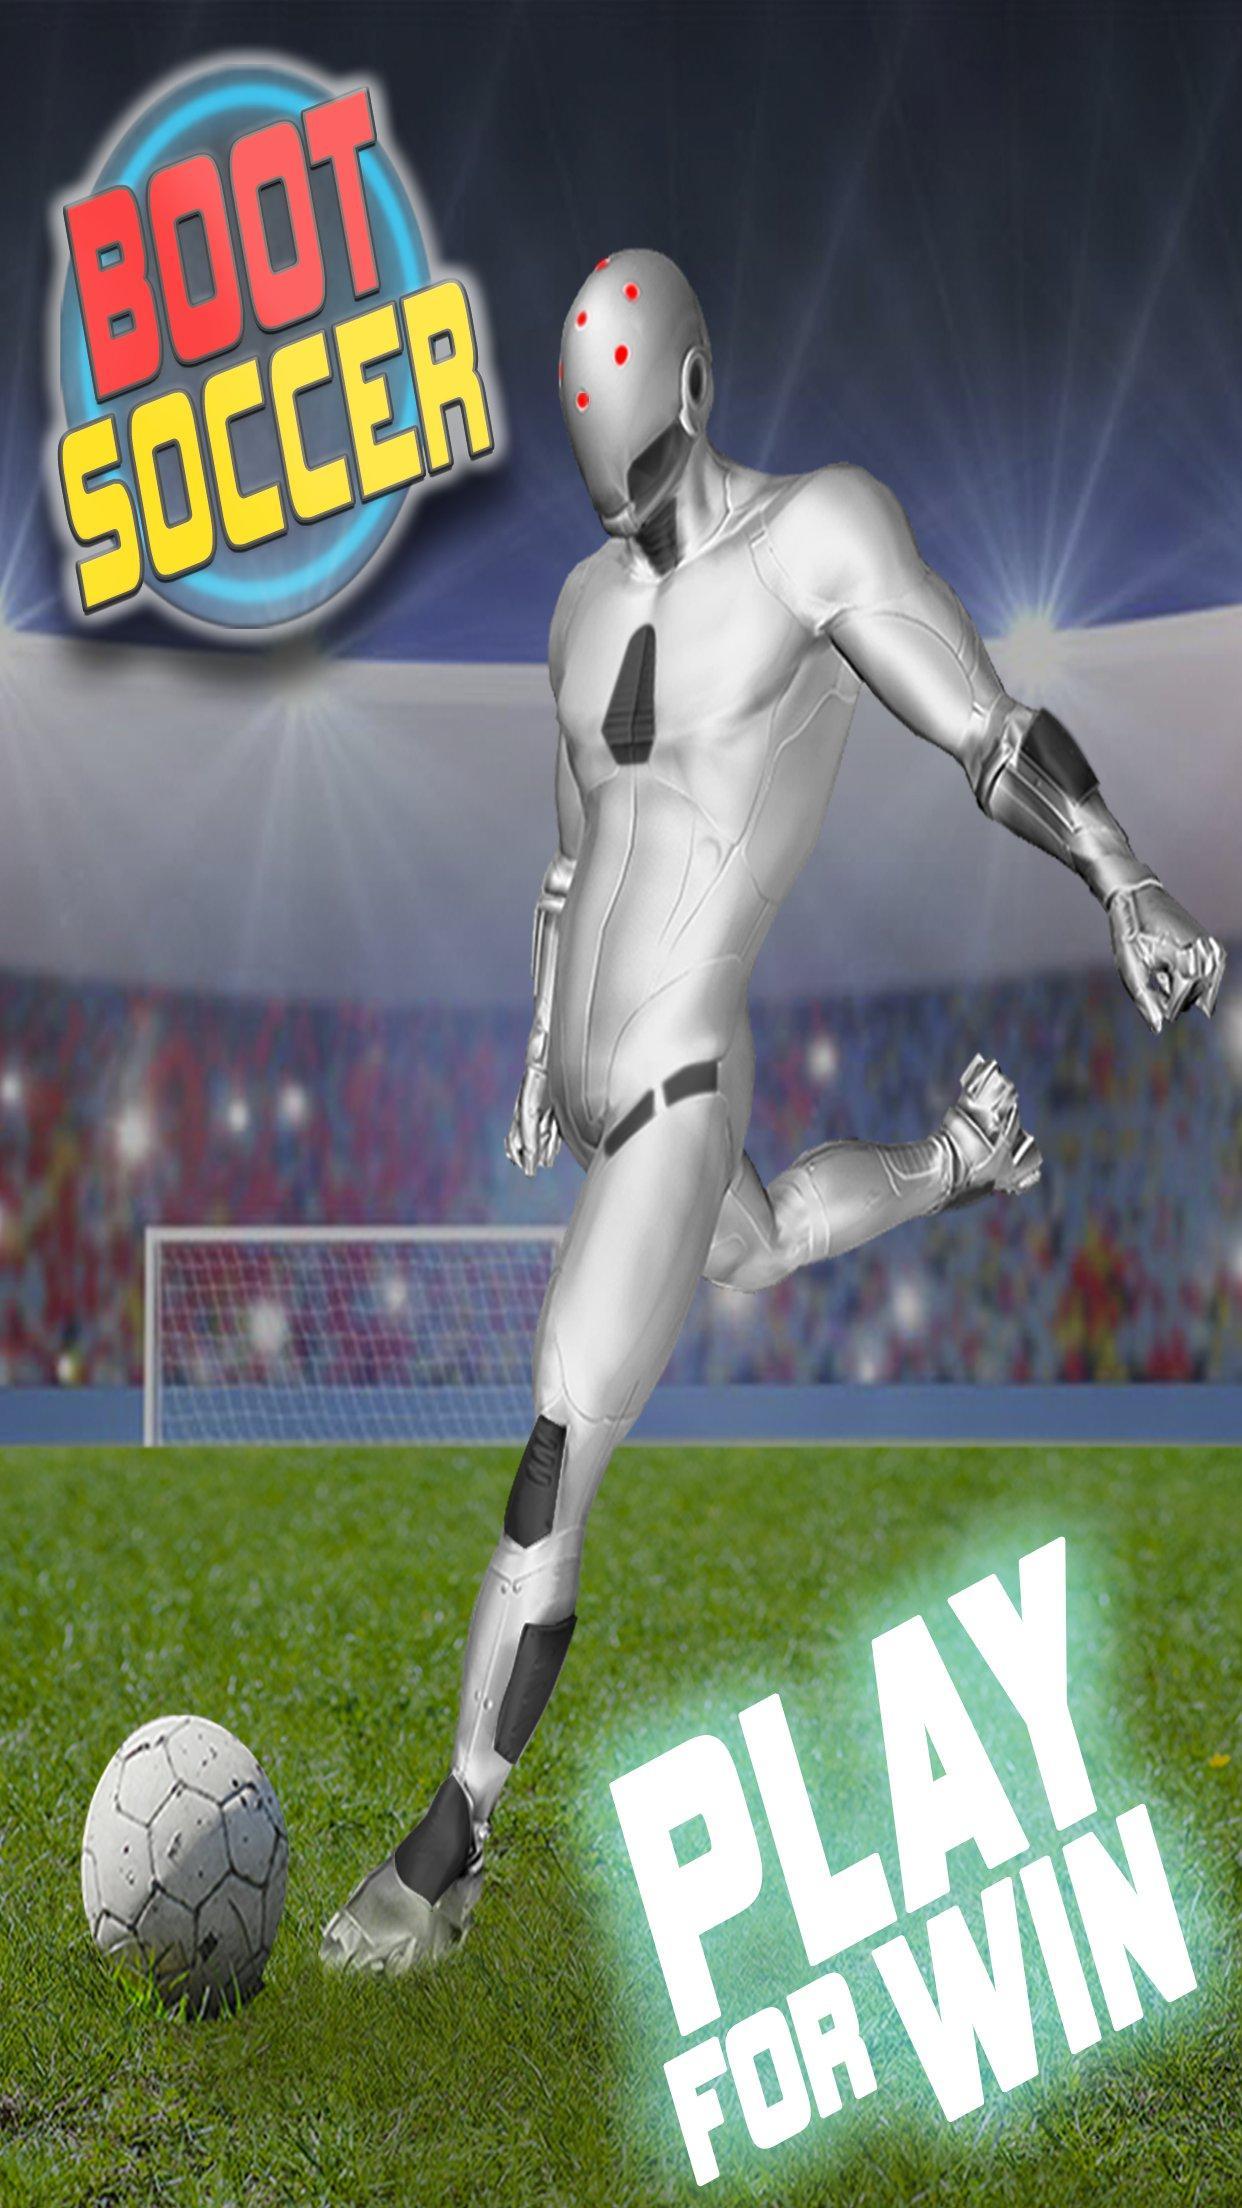 Screenshot 1 of Boot Soccer – Robot Kicks Penalty Game 5484 v5